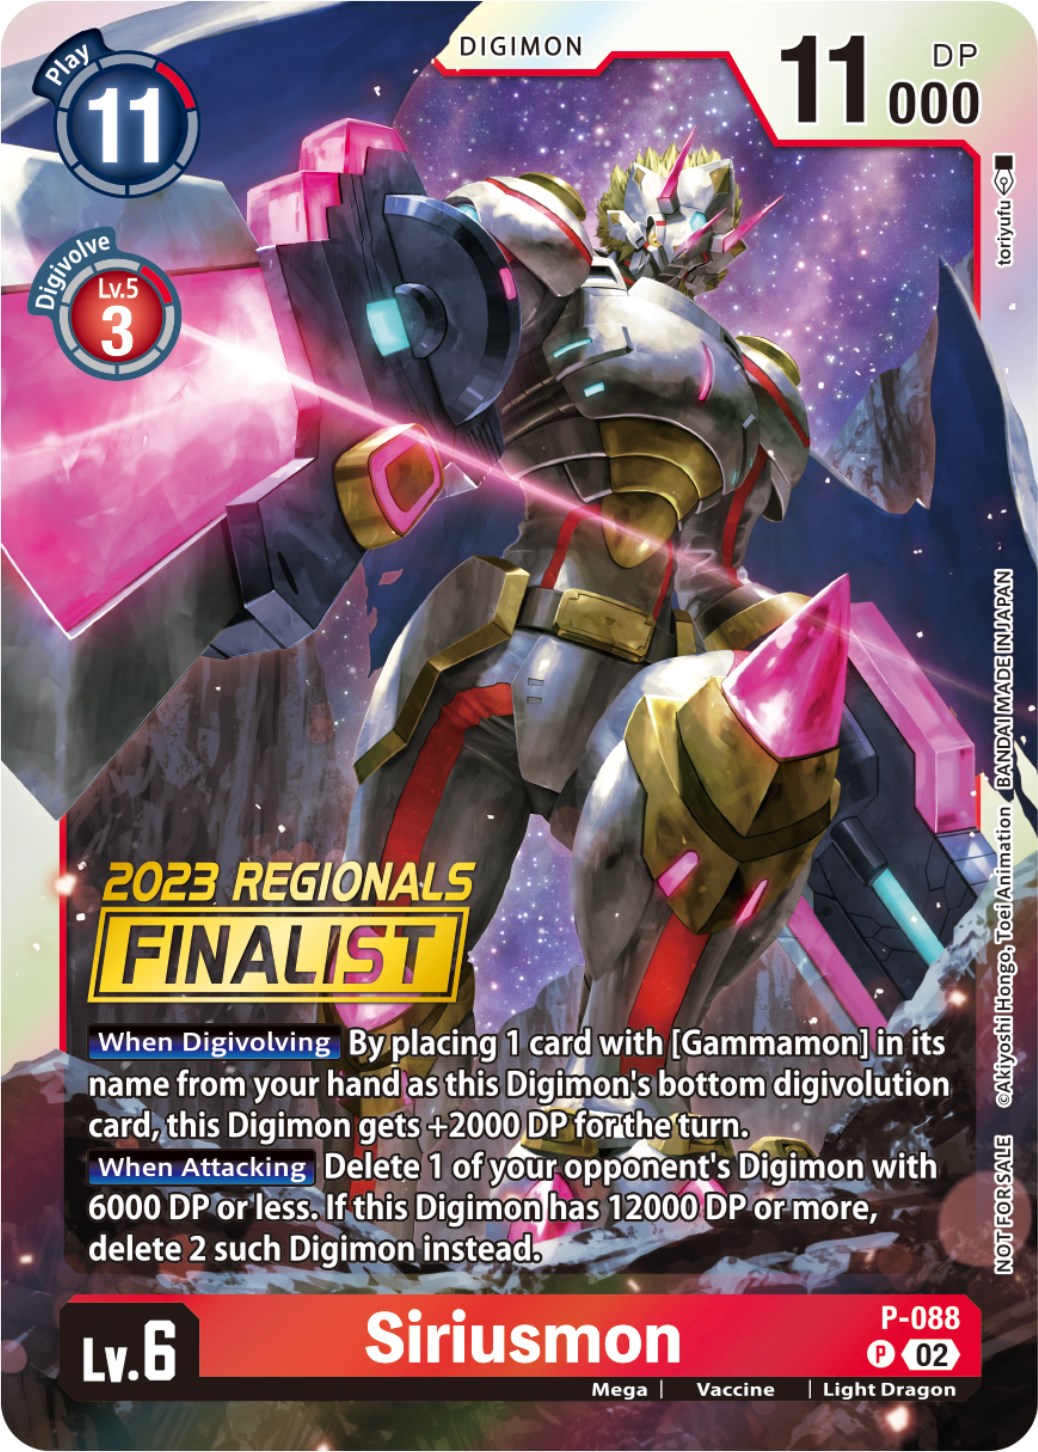 Siriusmon [P-088] (2023 Regionals Finalist) [Promotional Cards] | Devastation Store